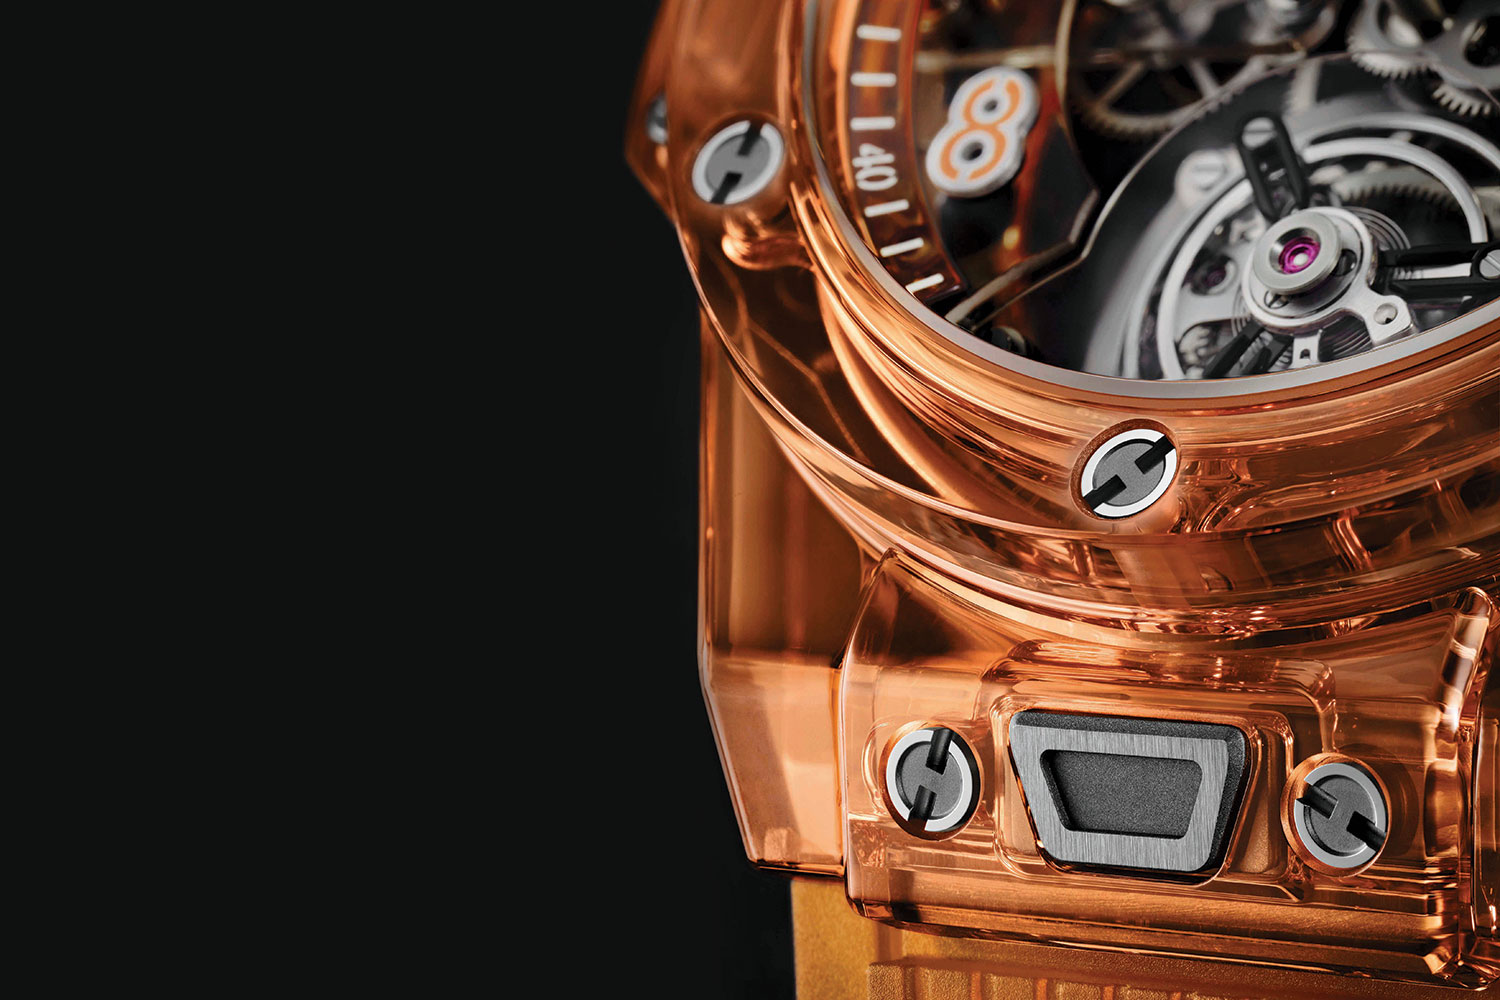 Hublot Big Bang Tourbillon Automatic Orange Sapphire 45mm Watch